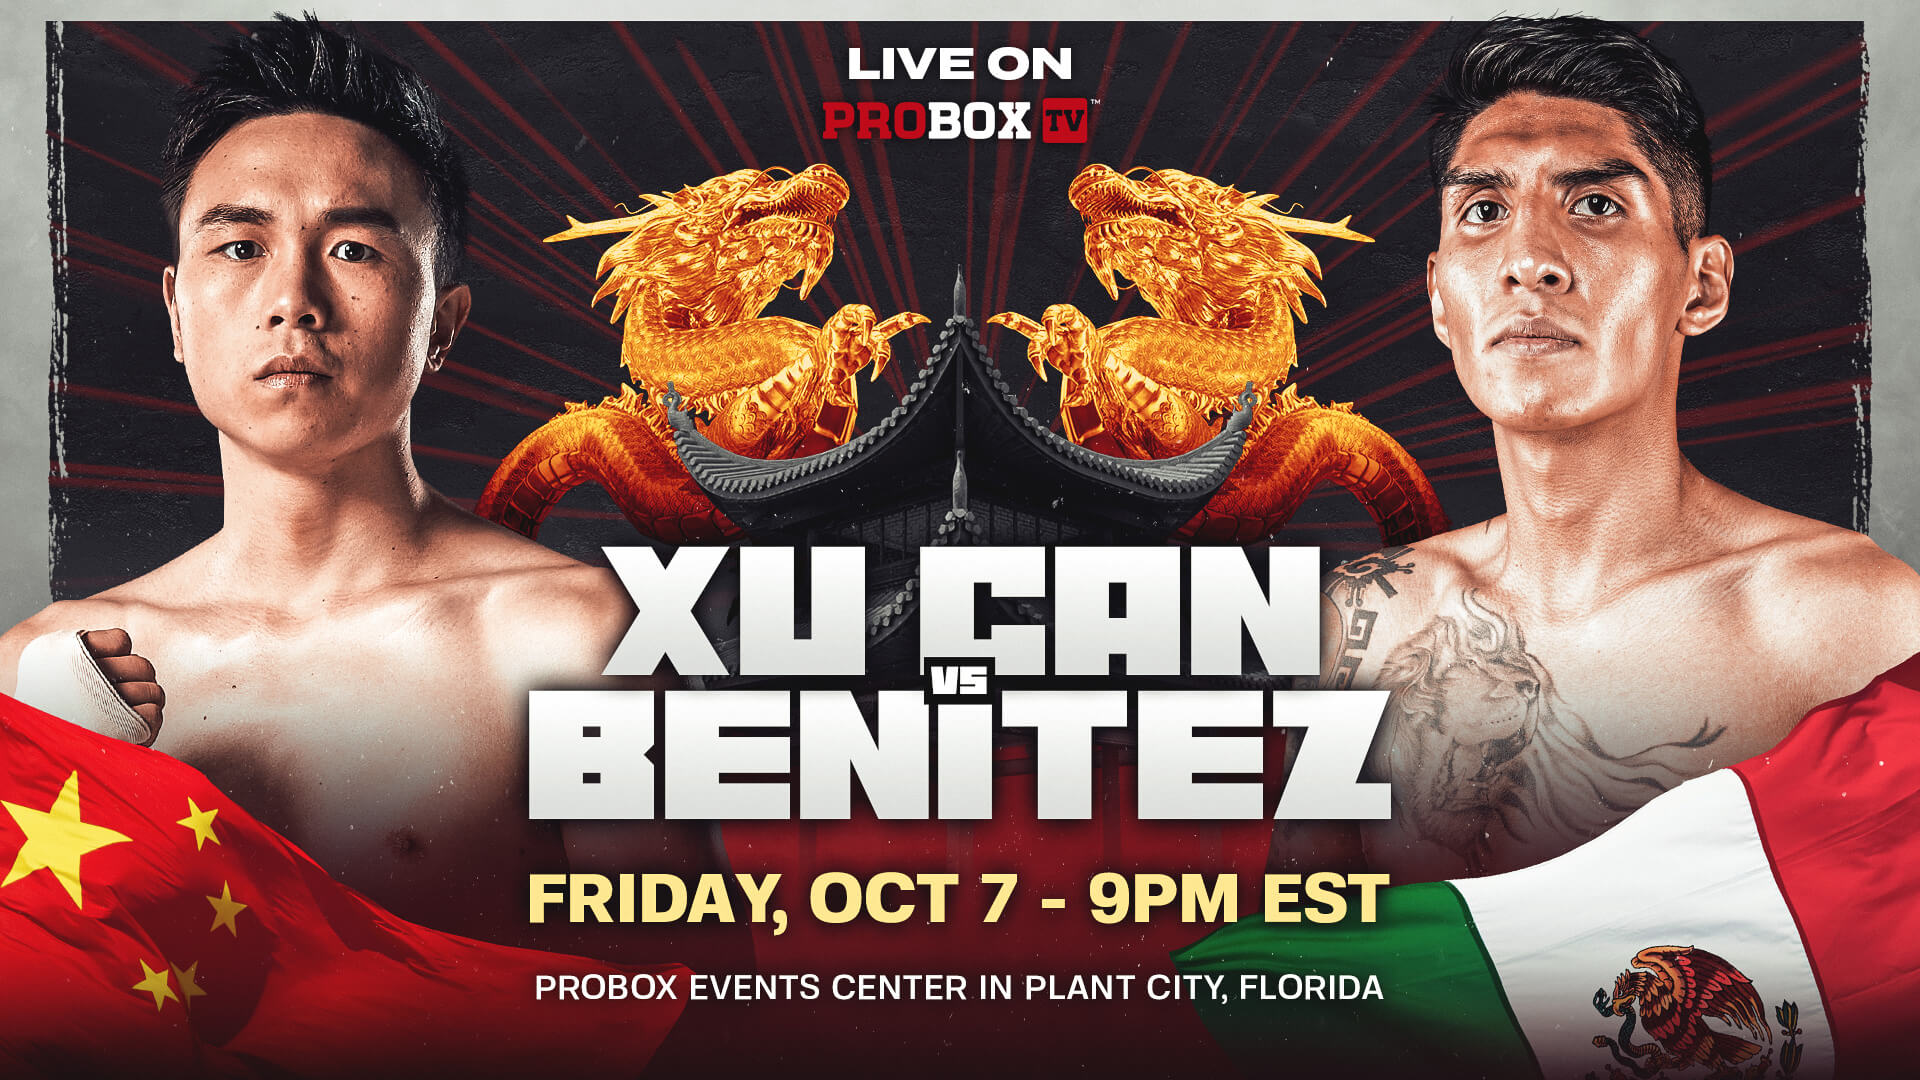 Xu Can vs Benitez,  October 7 at at ProBox Event Center in Plant City, Florida